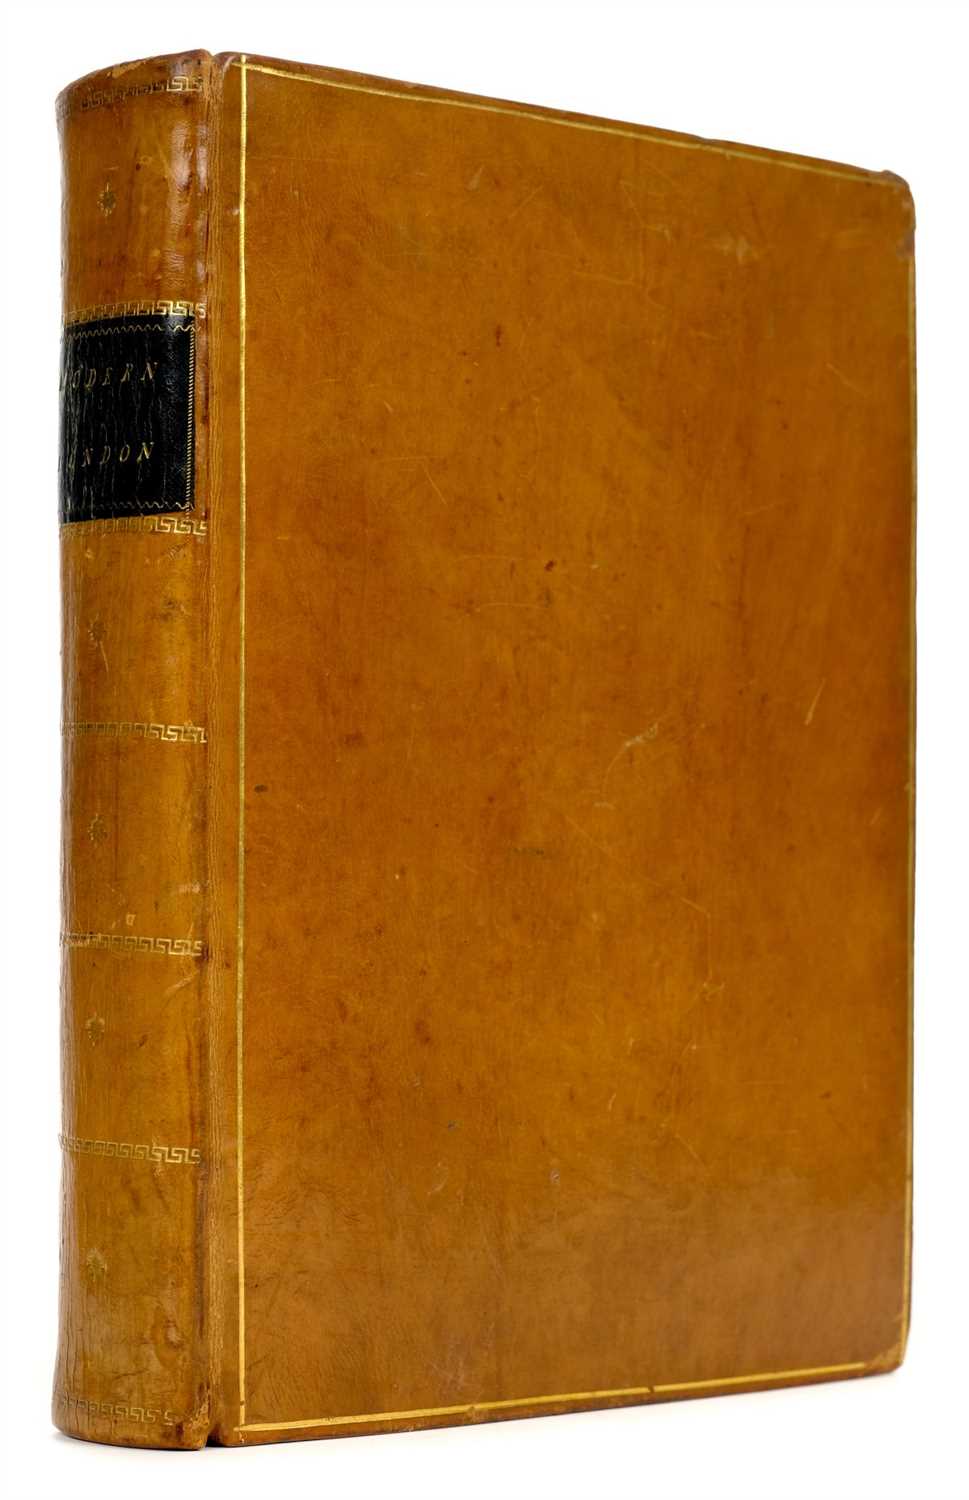 Phillips (Richard, publisher). Modern London, 1805